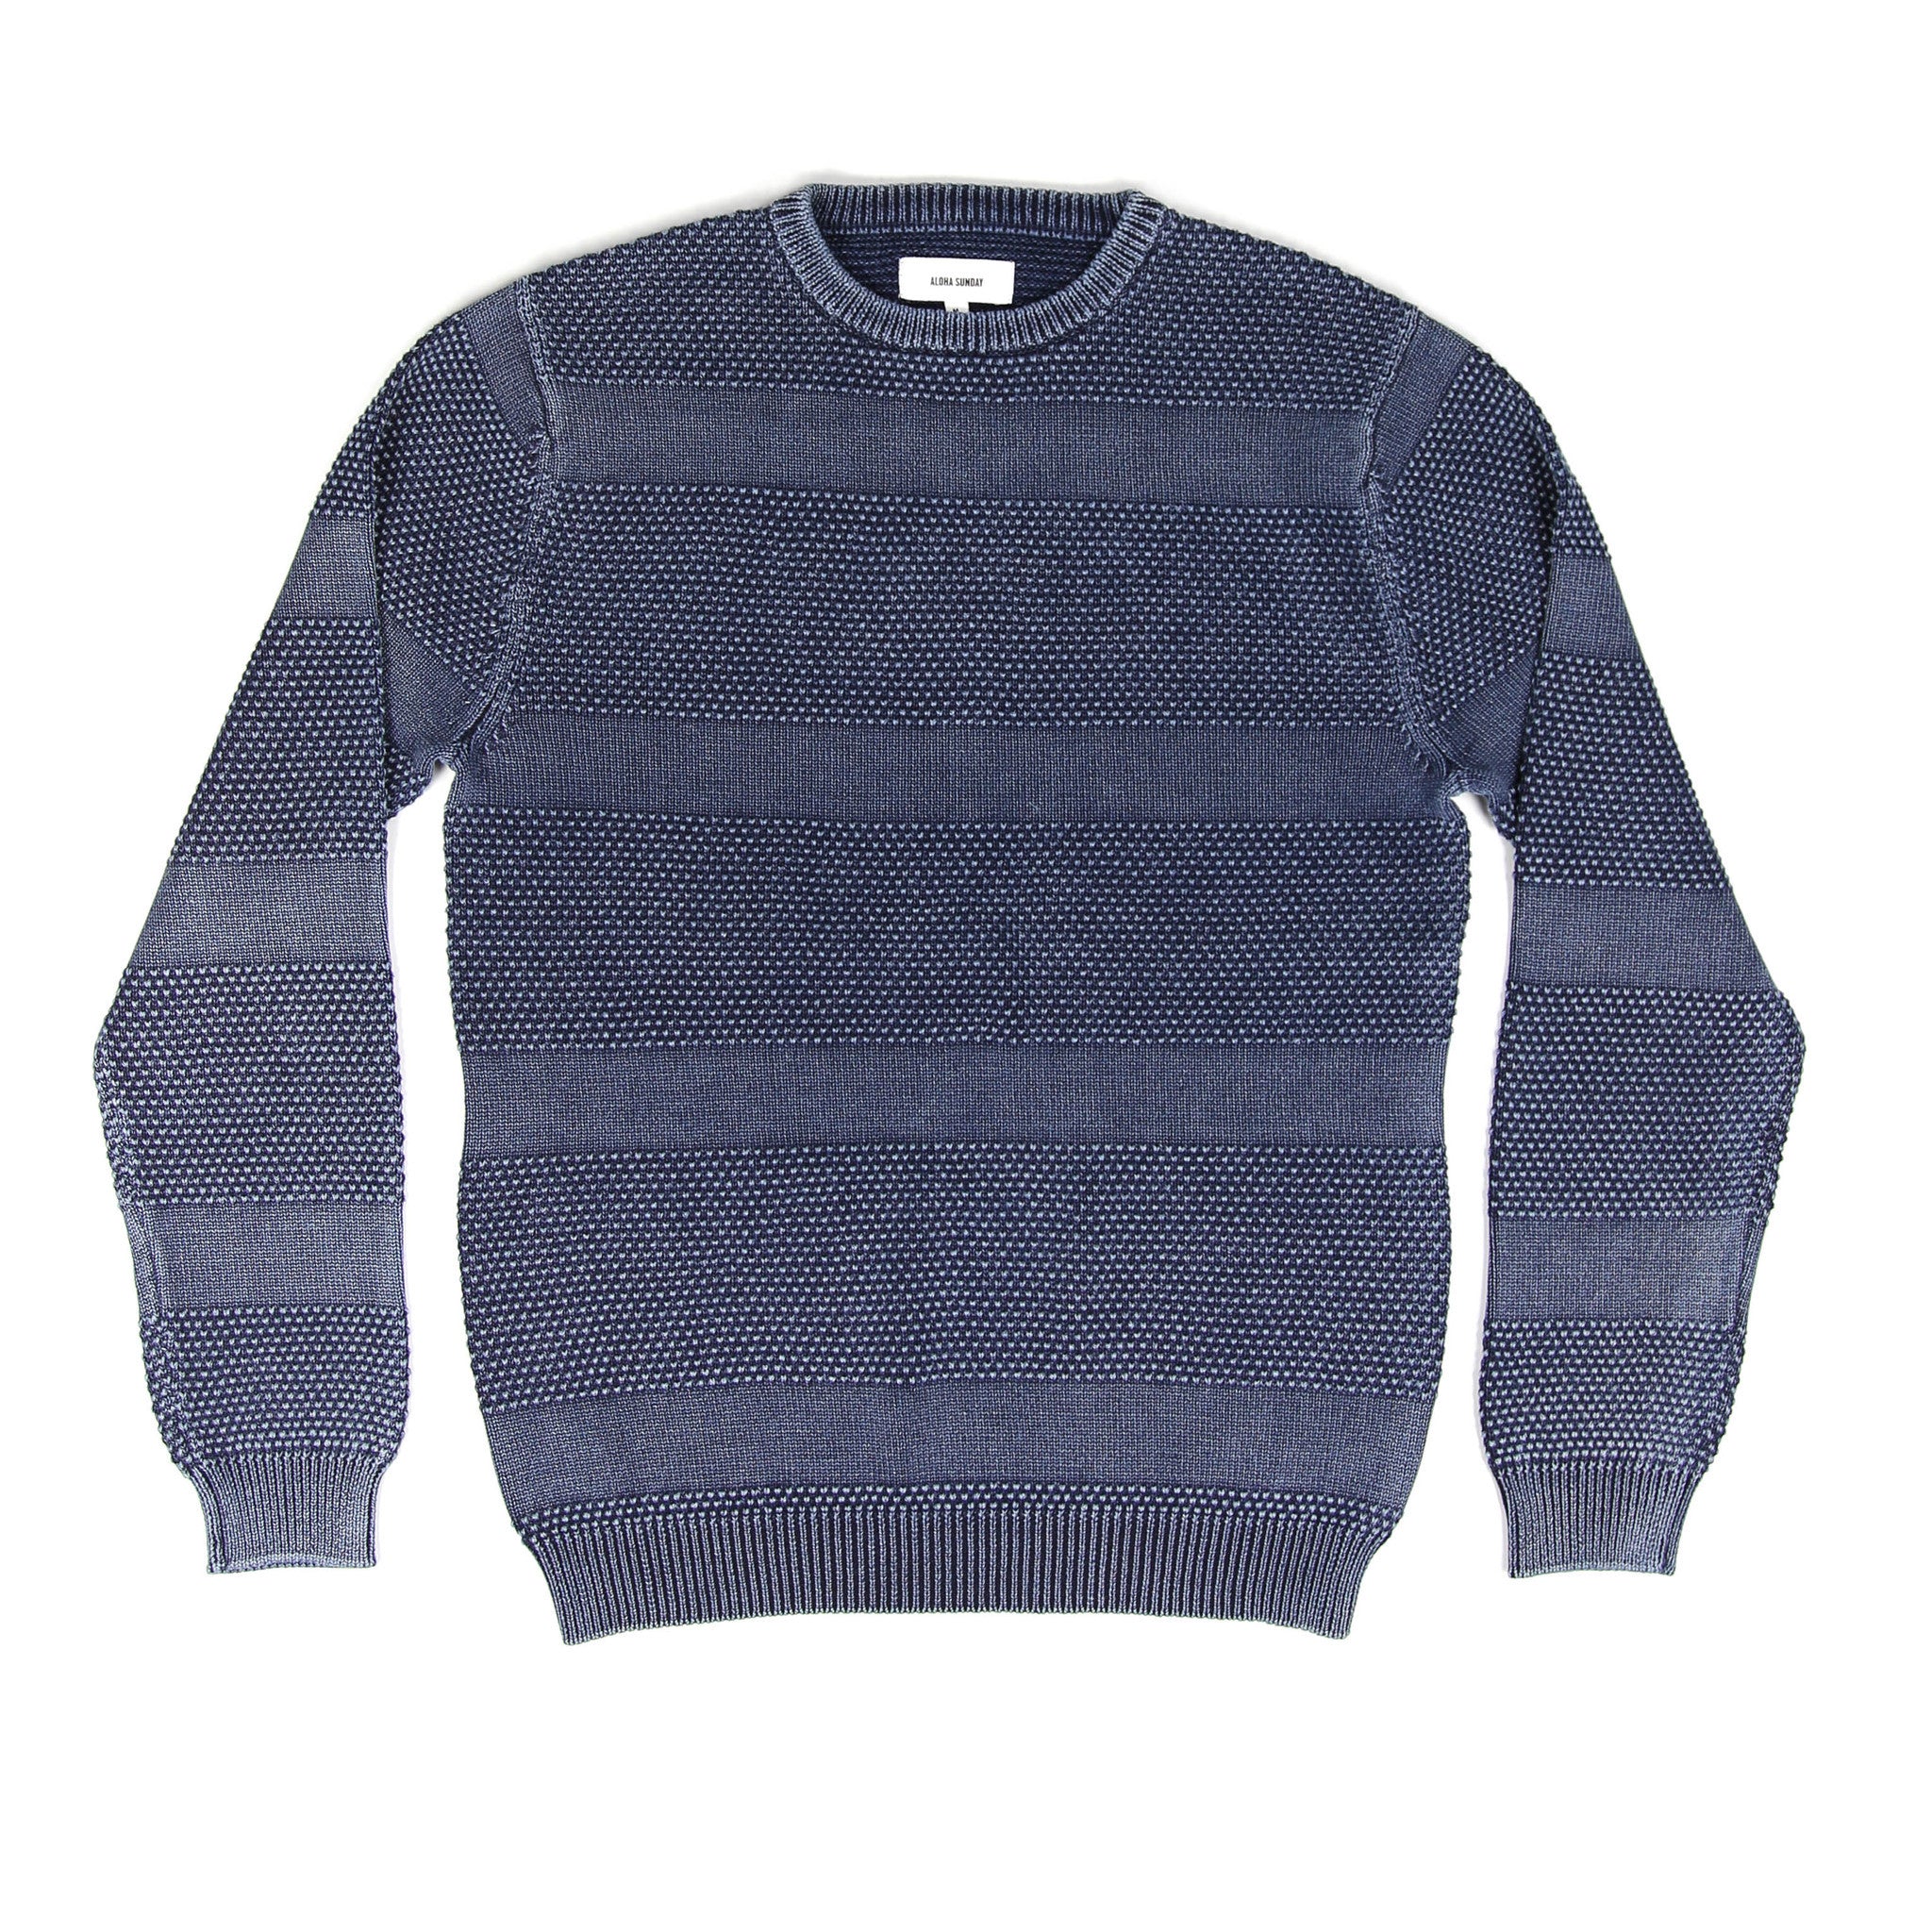 Ascent Sweater - Indigo